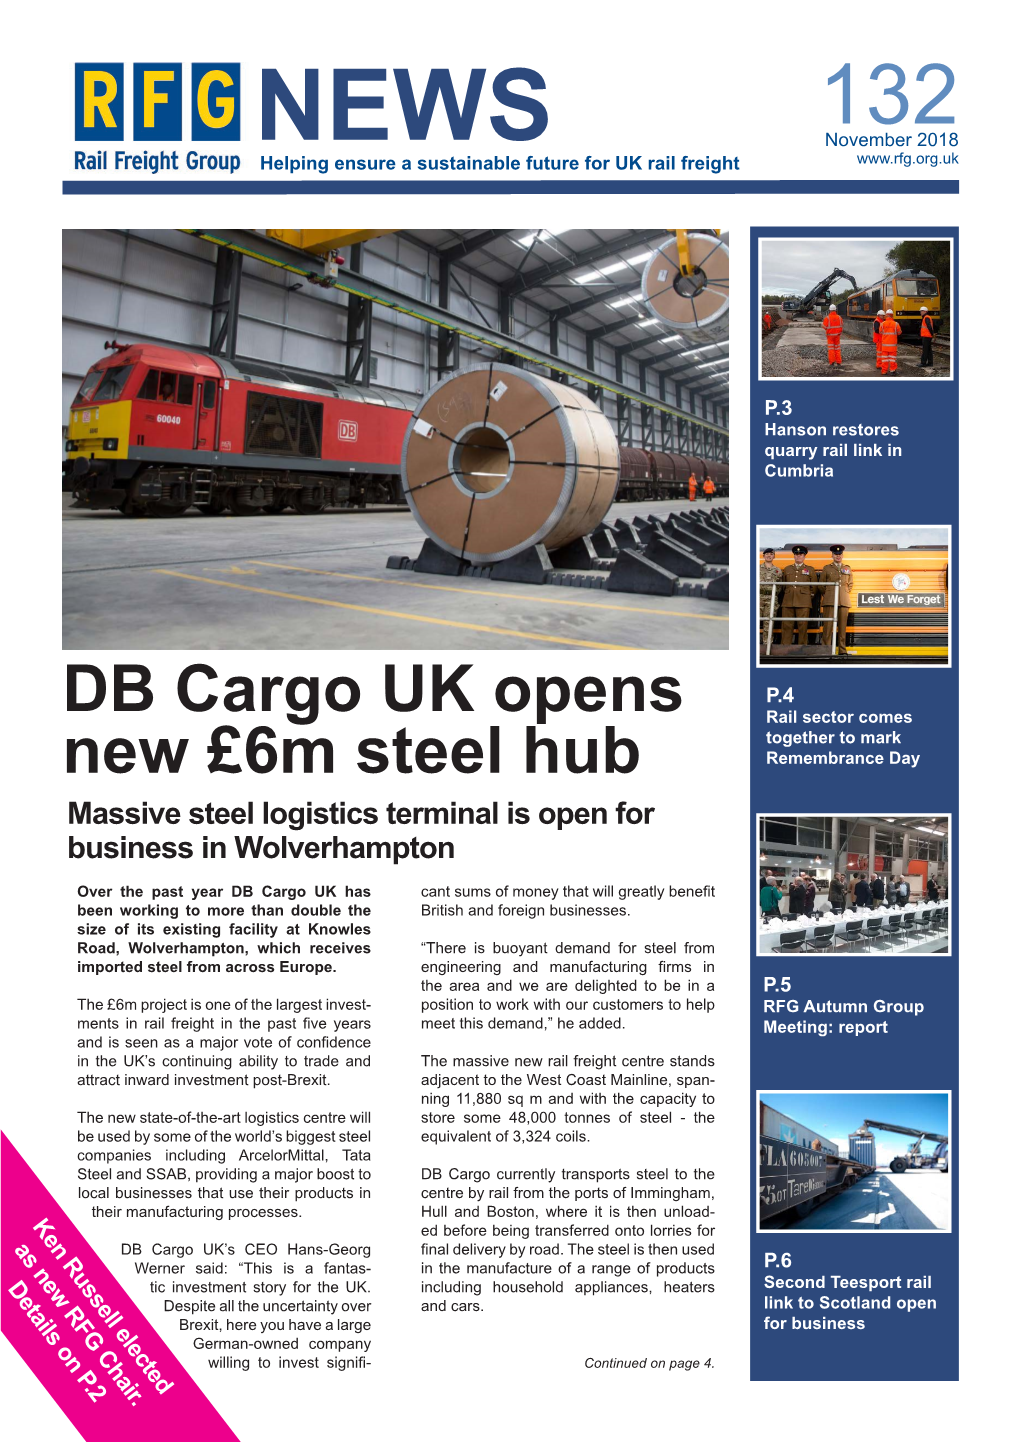 DB Cargo UK Opens New £6M Steel